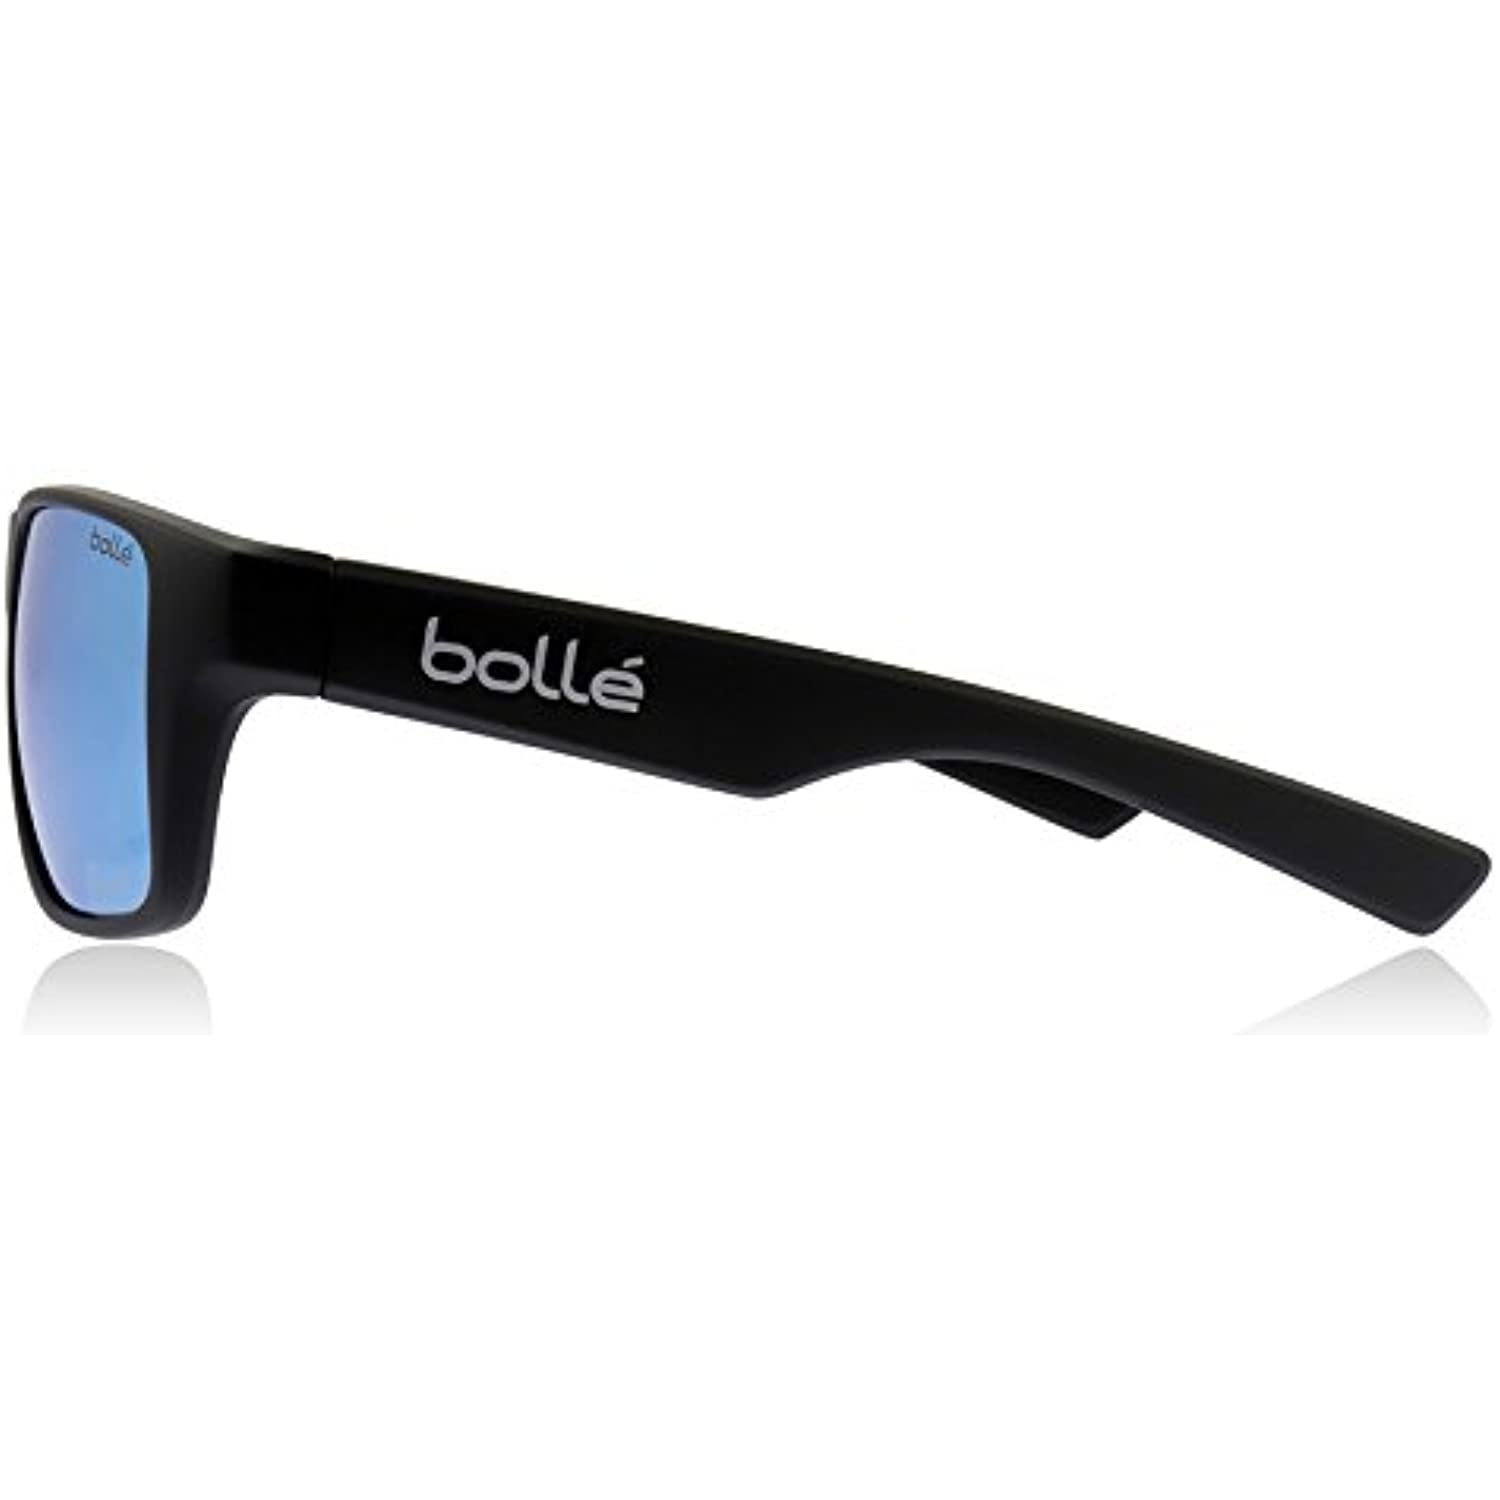 Bolle Brecken Matte Black Sunglasses Greys Distribution 12432 